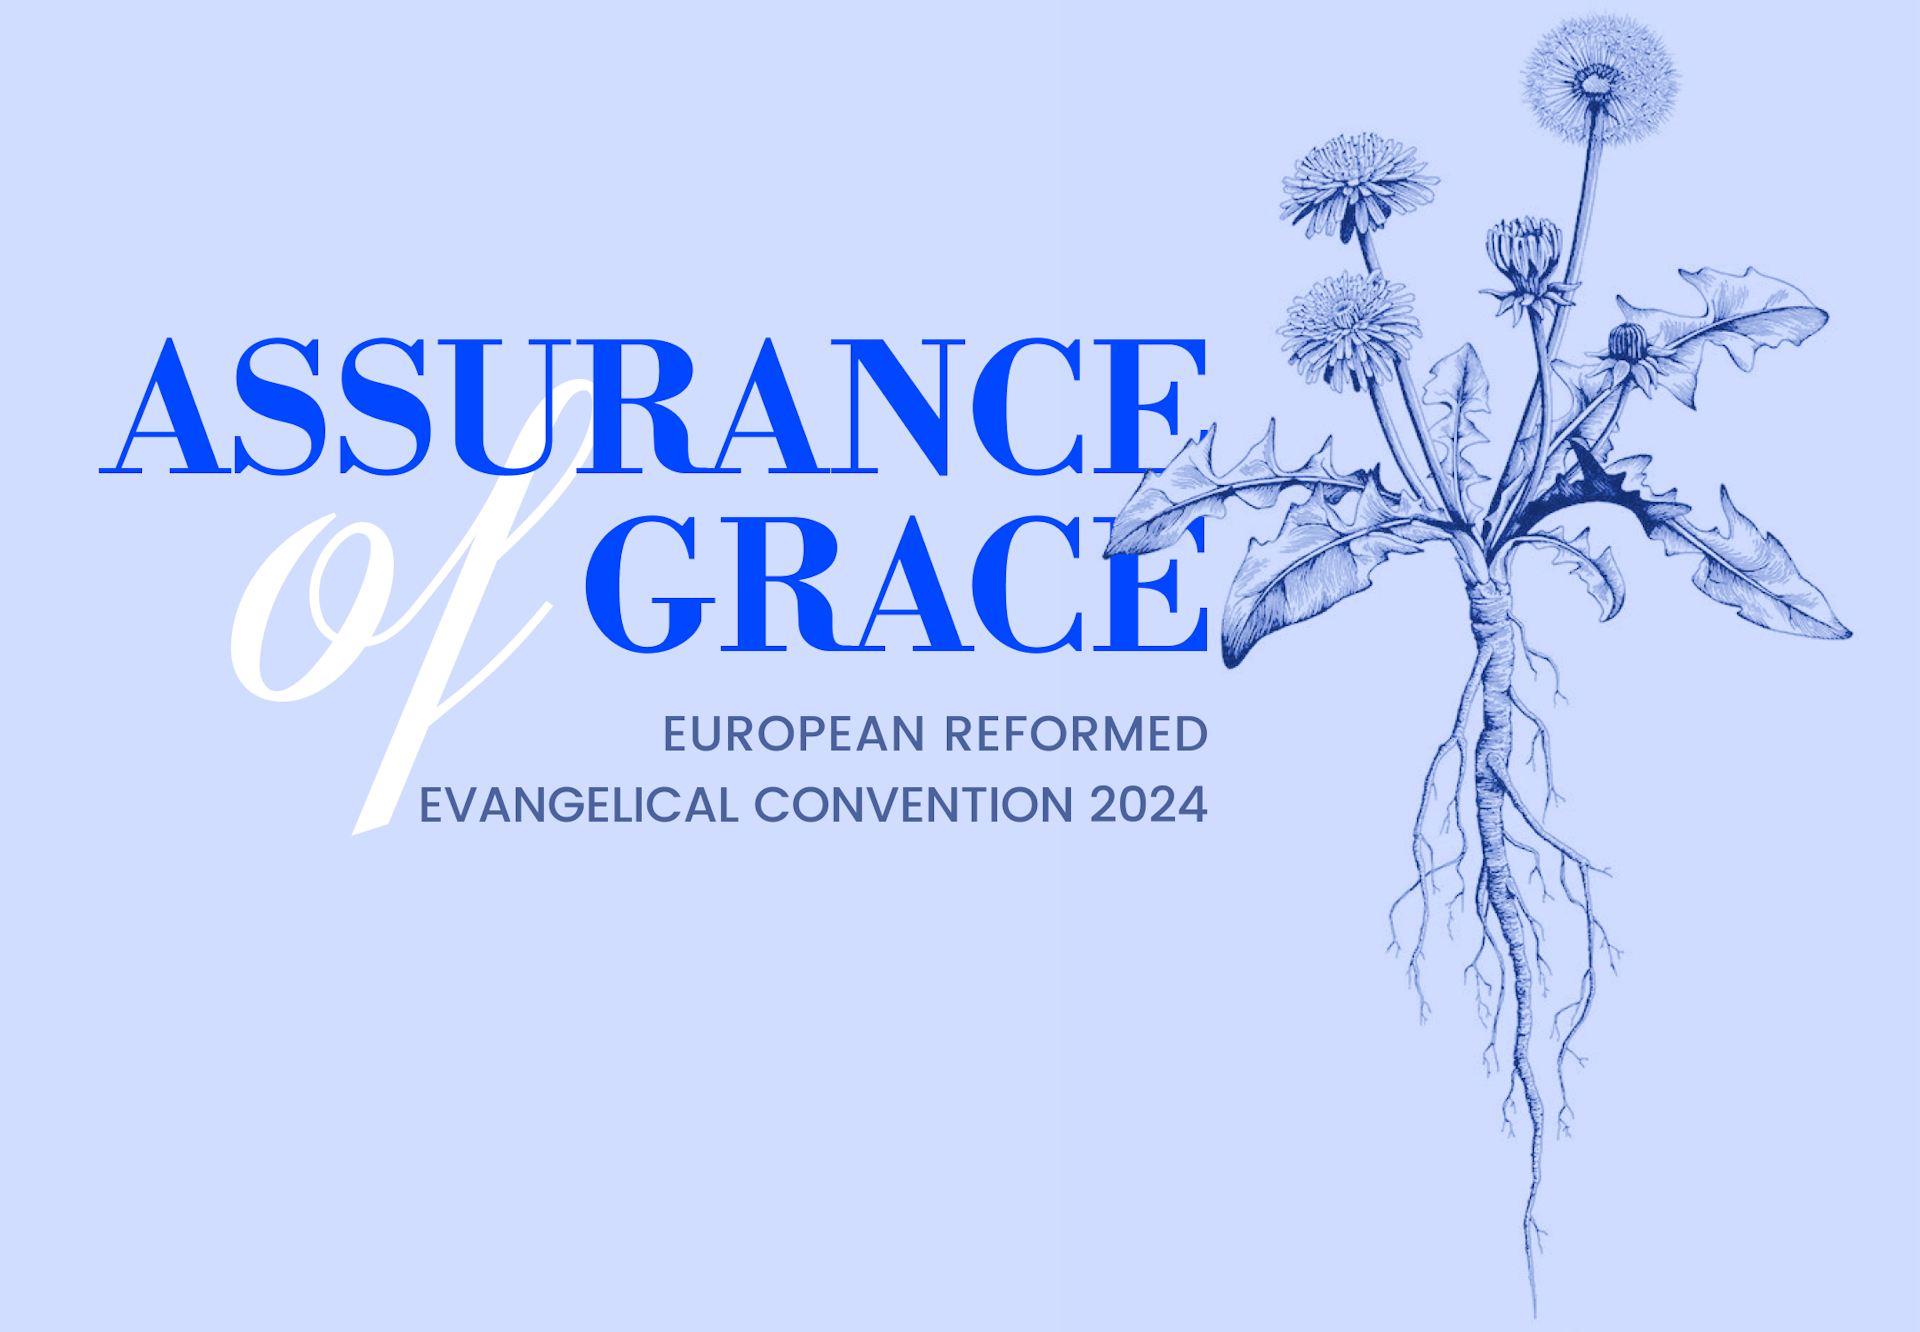 Assurance of Grace